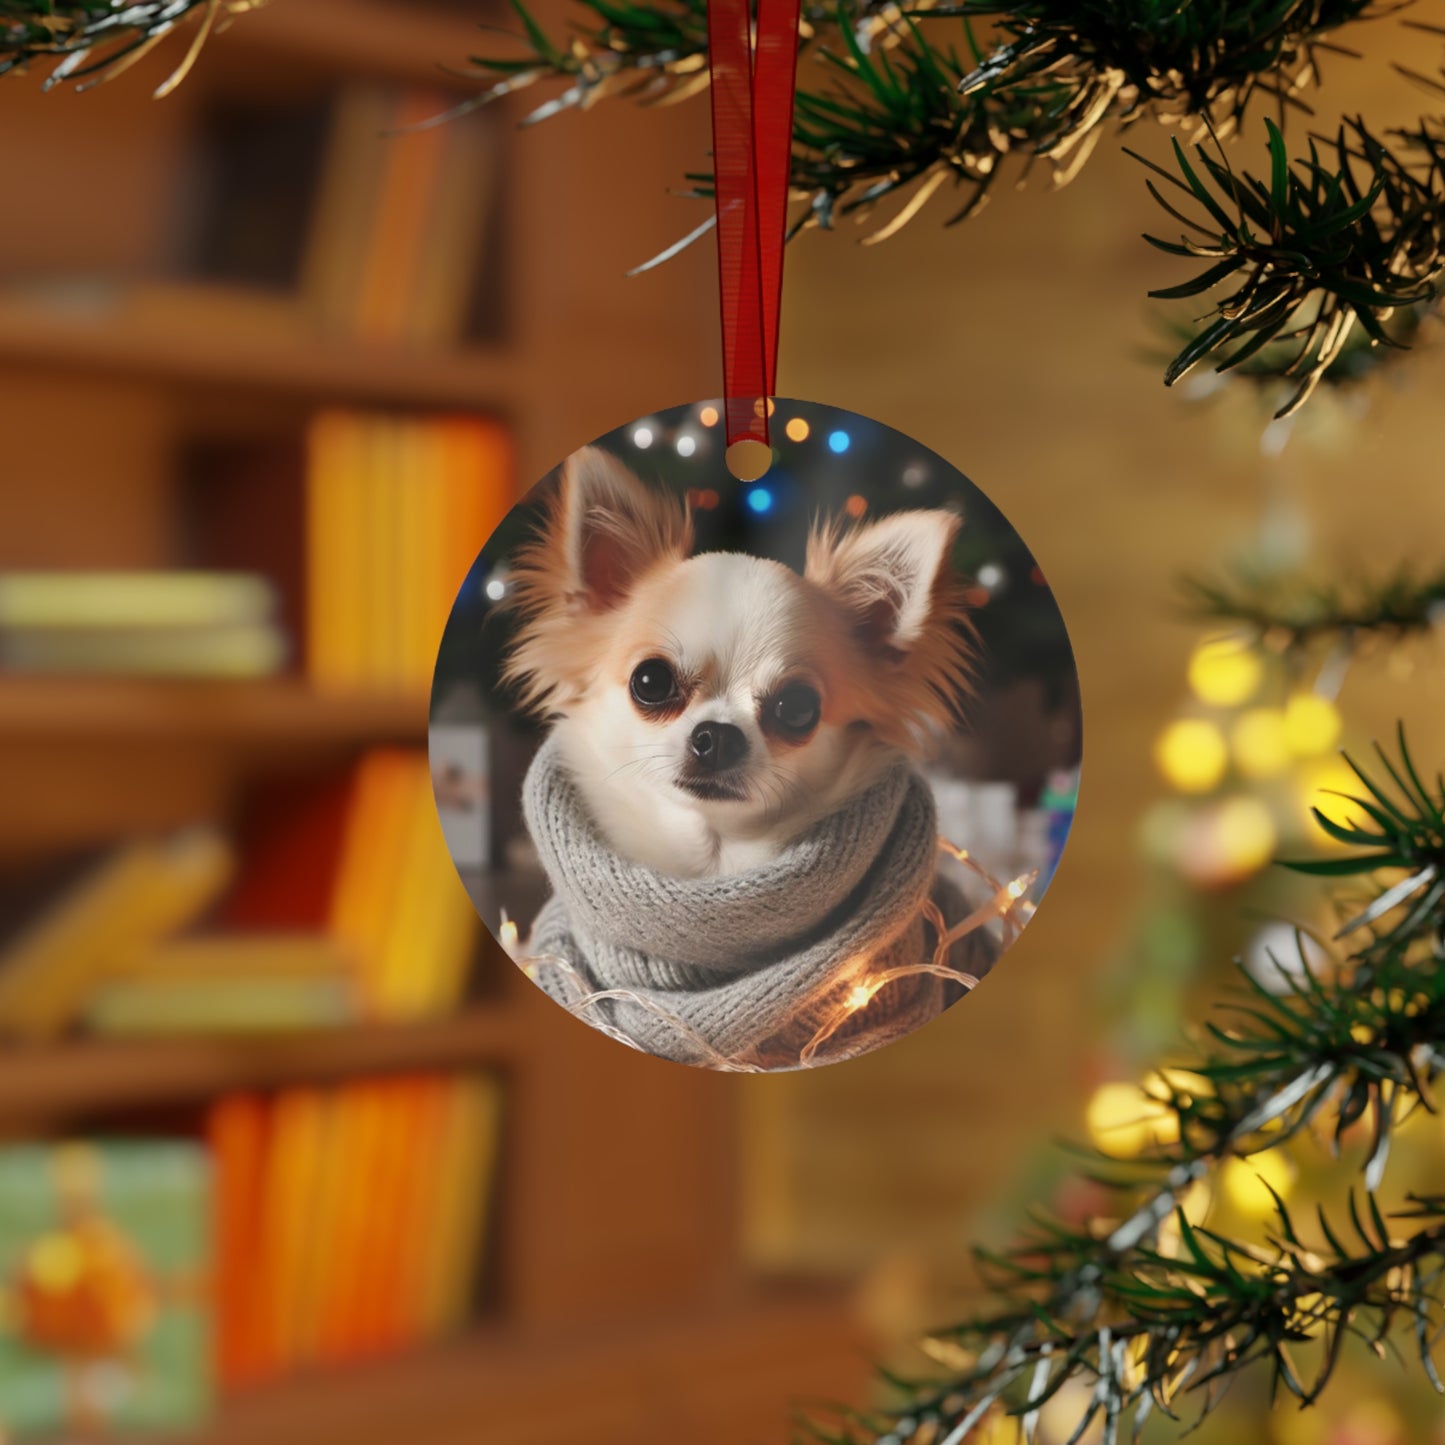 Chihuahua #2 Metal Ornaments